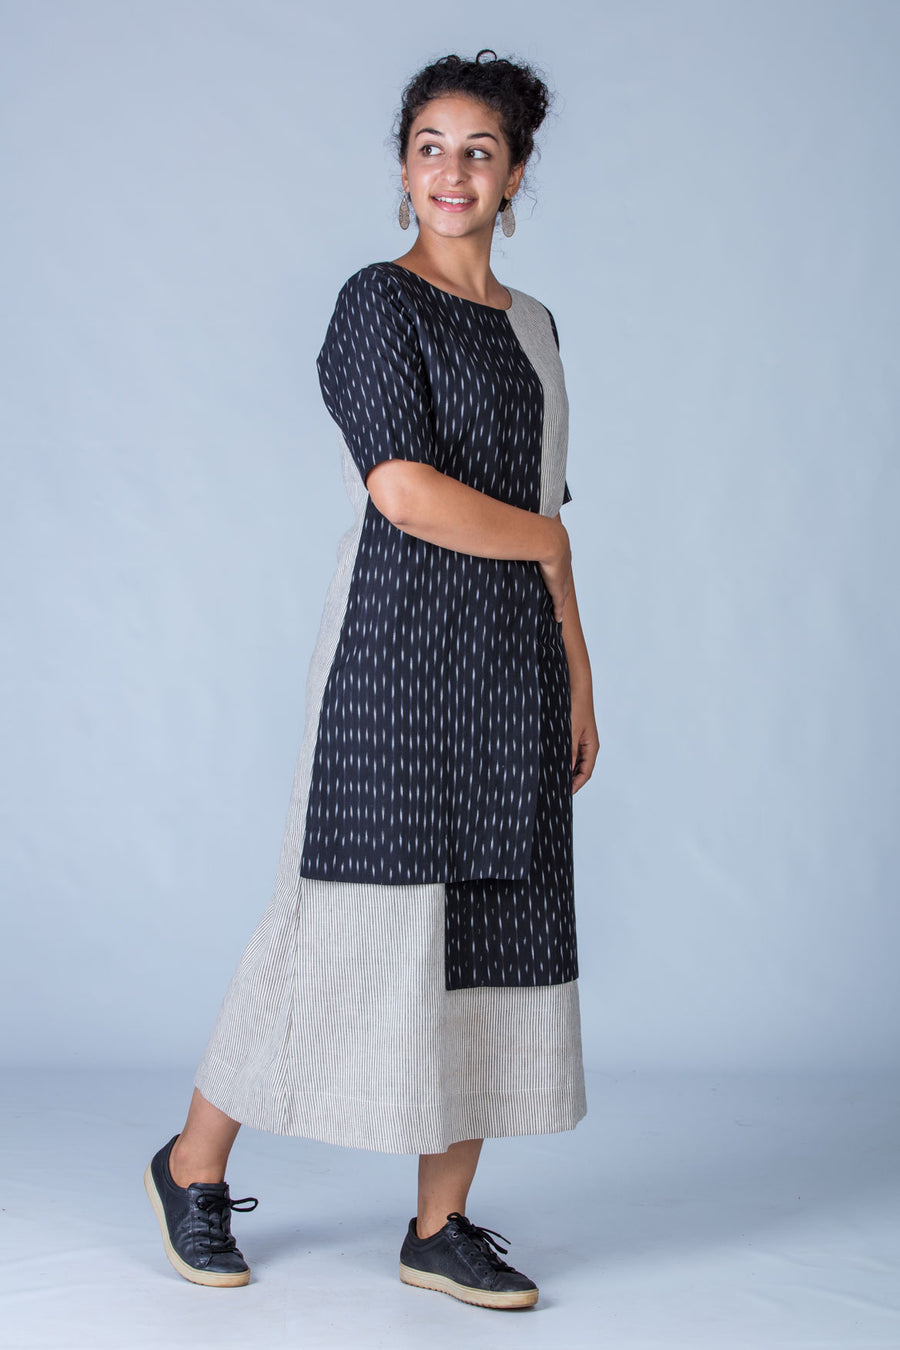 Black and White Ikat Dress - SANGYA - Upasana Design Studio